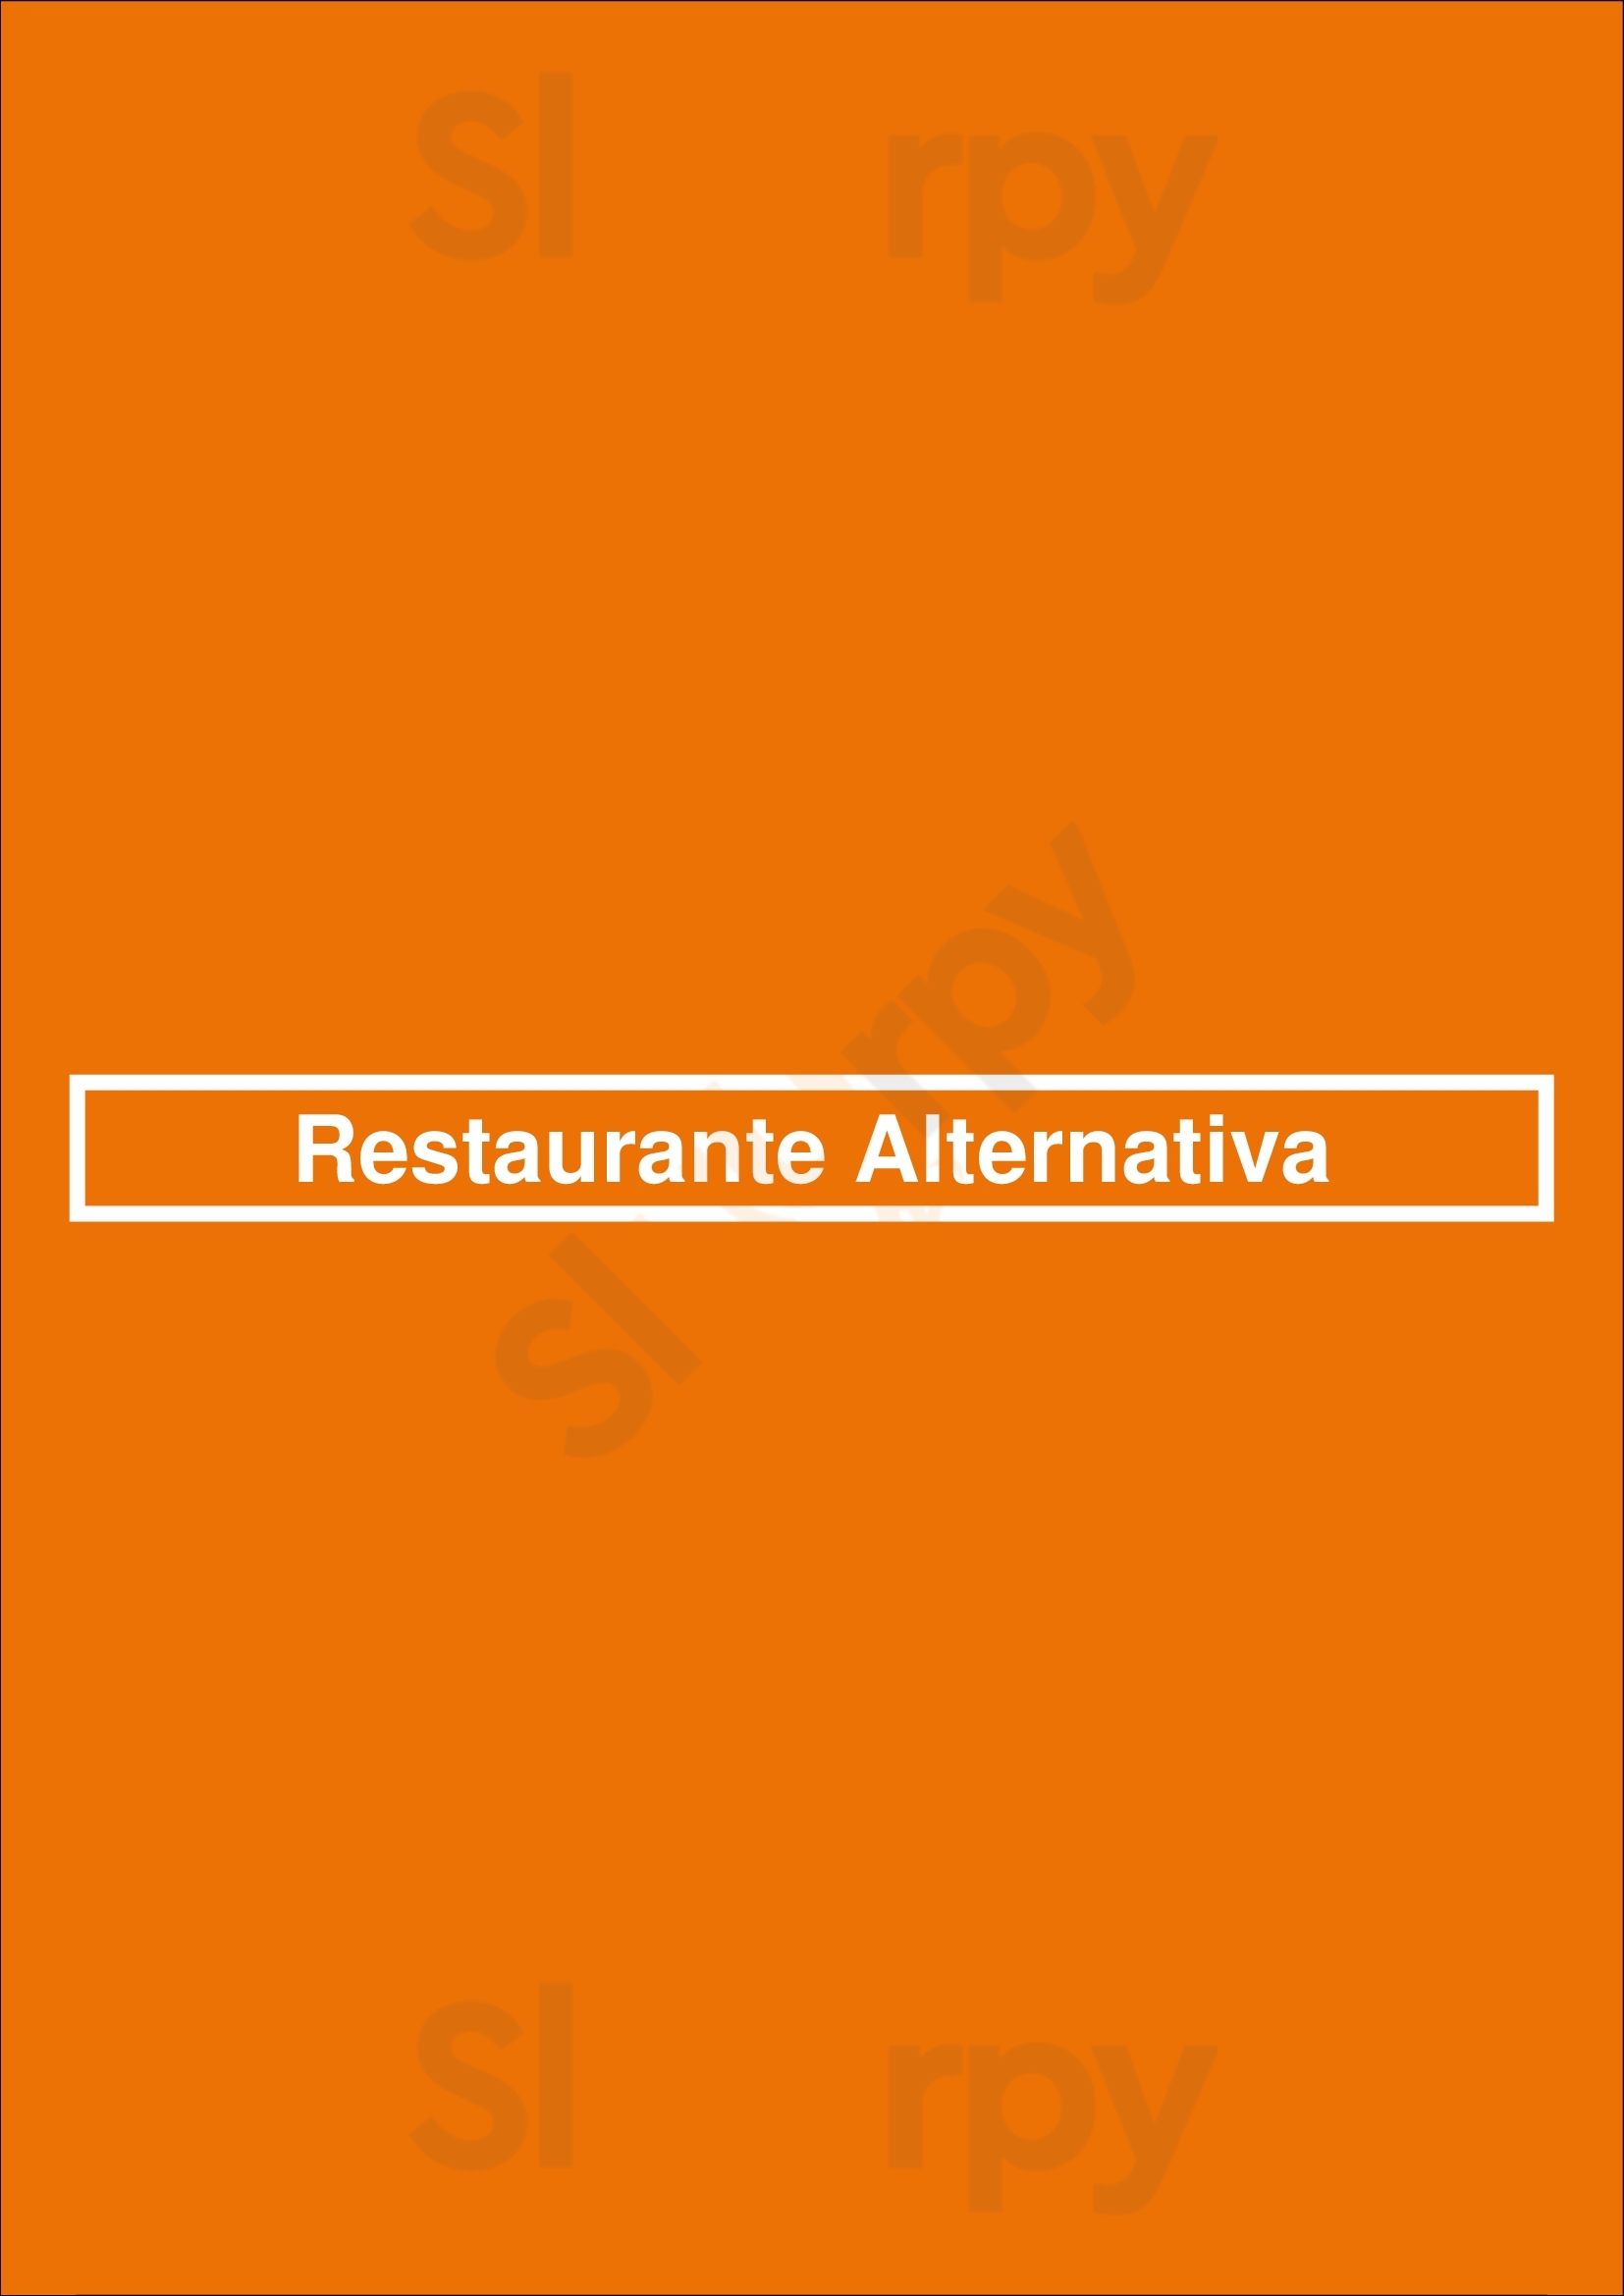 Restaurante Alternativa Alcochete Menu - 1